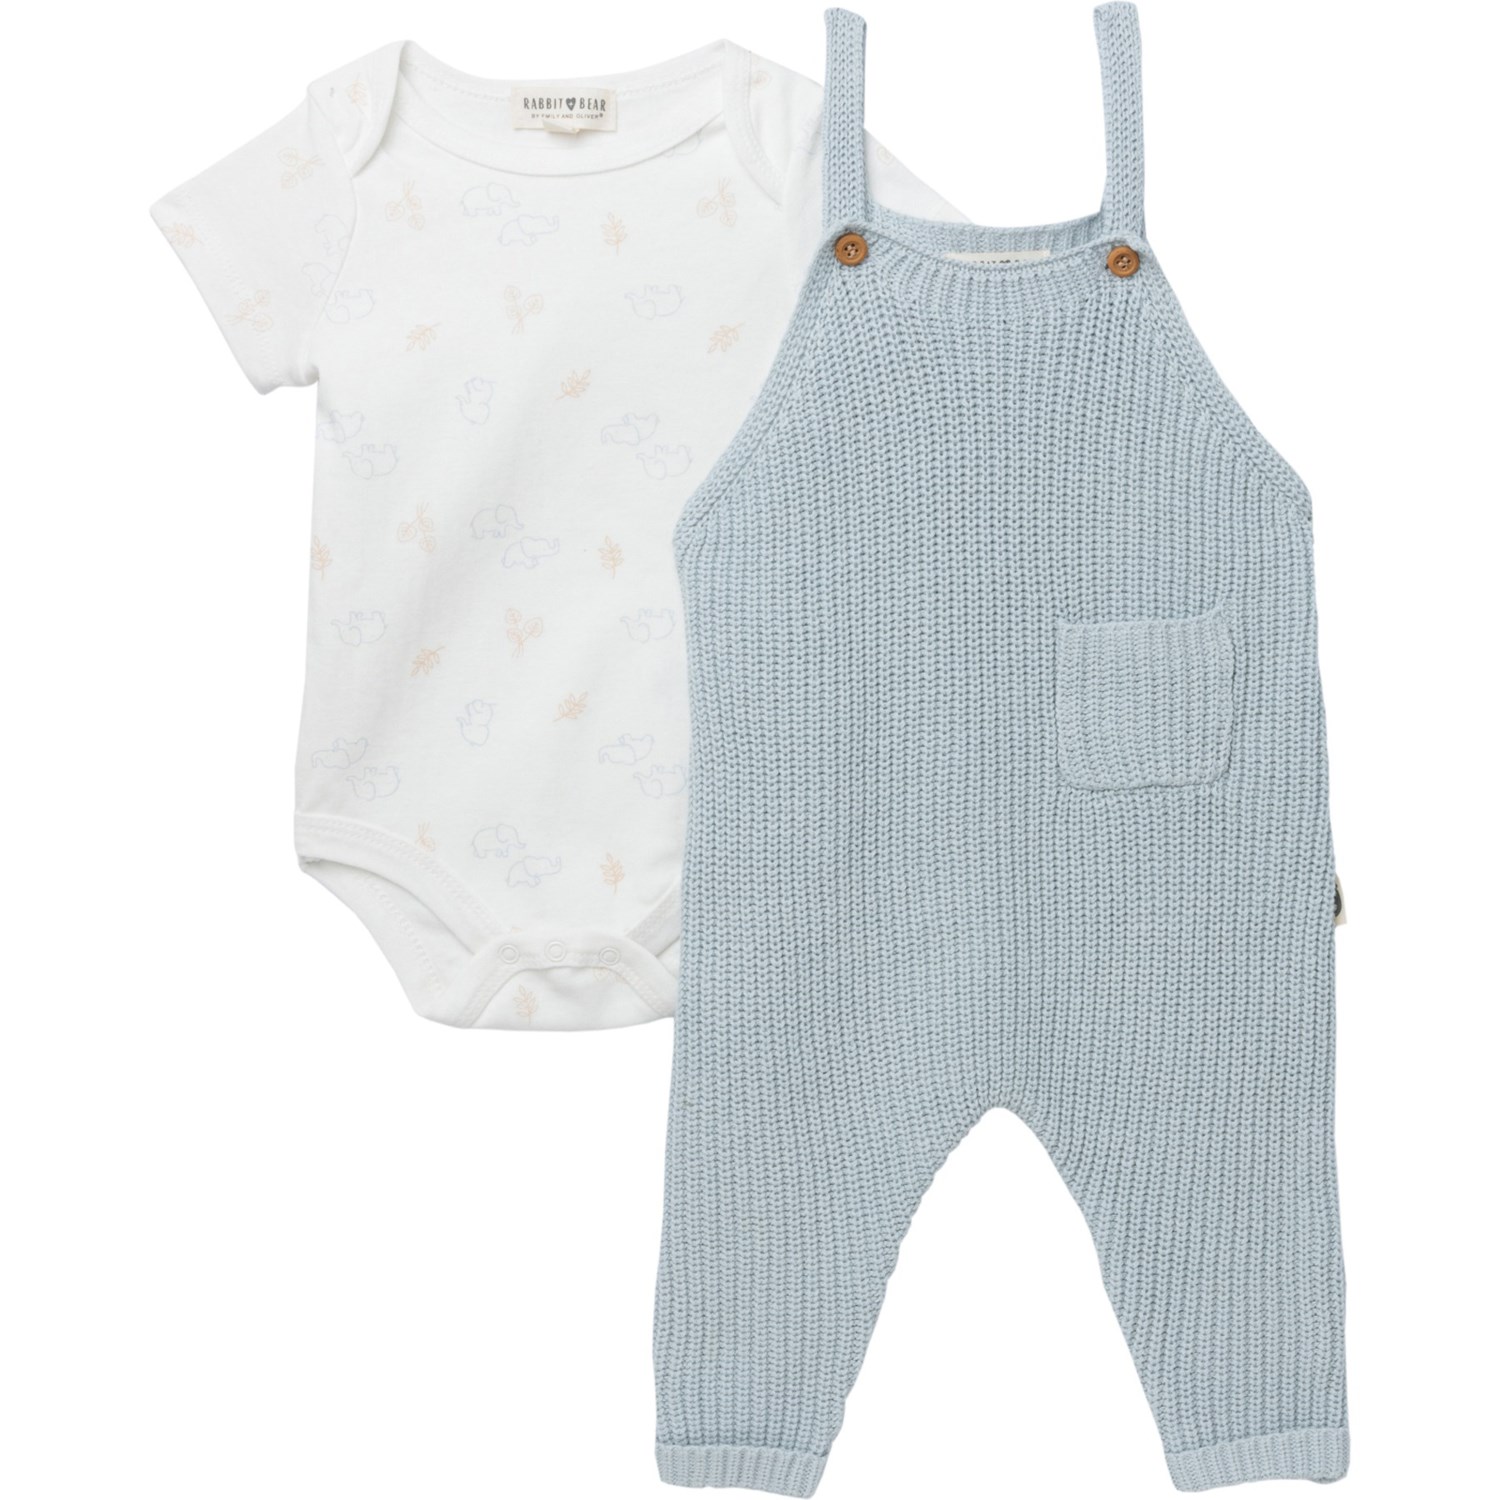 Bee Essentials Organic Short Sleeve Baby Bodysuit 5 Pack